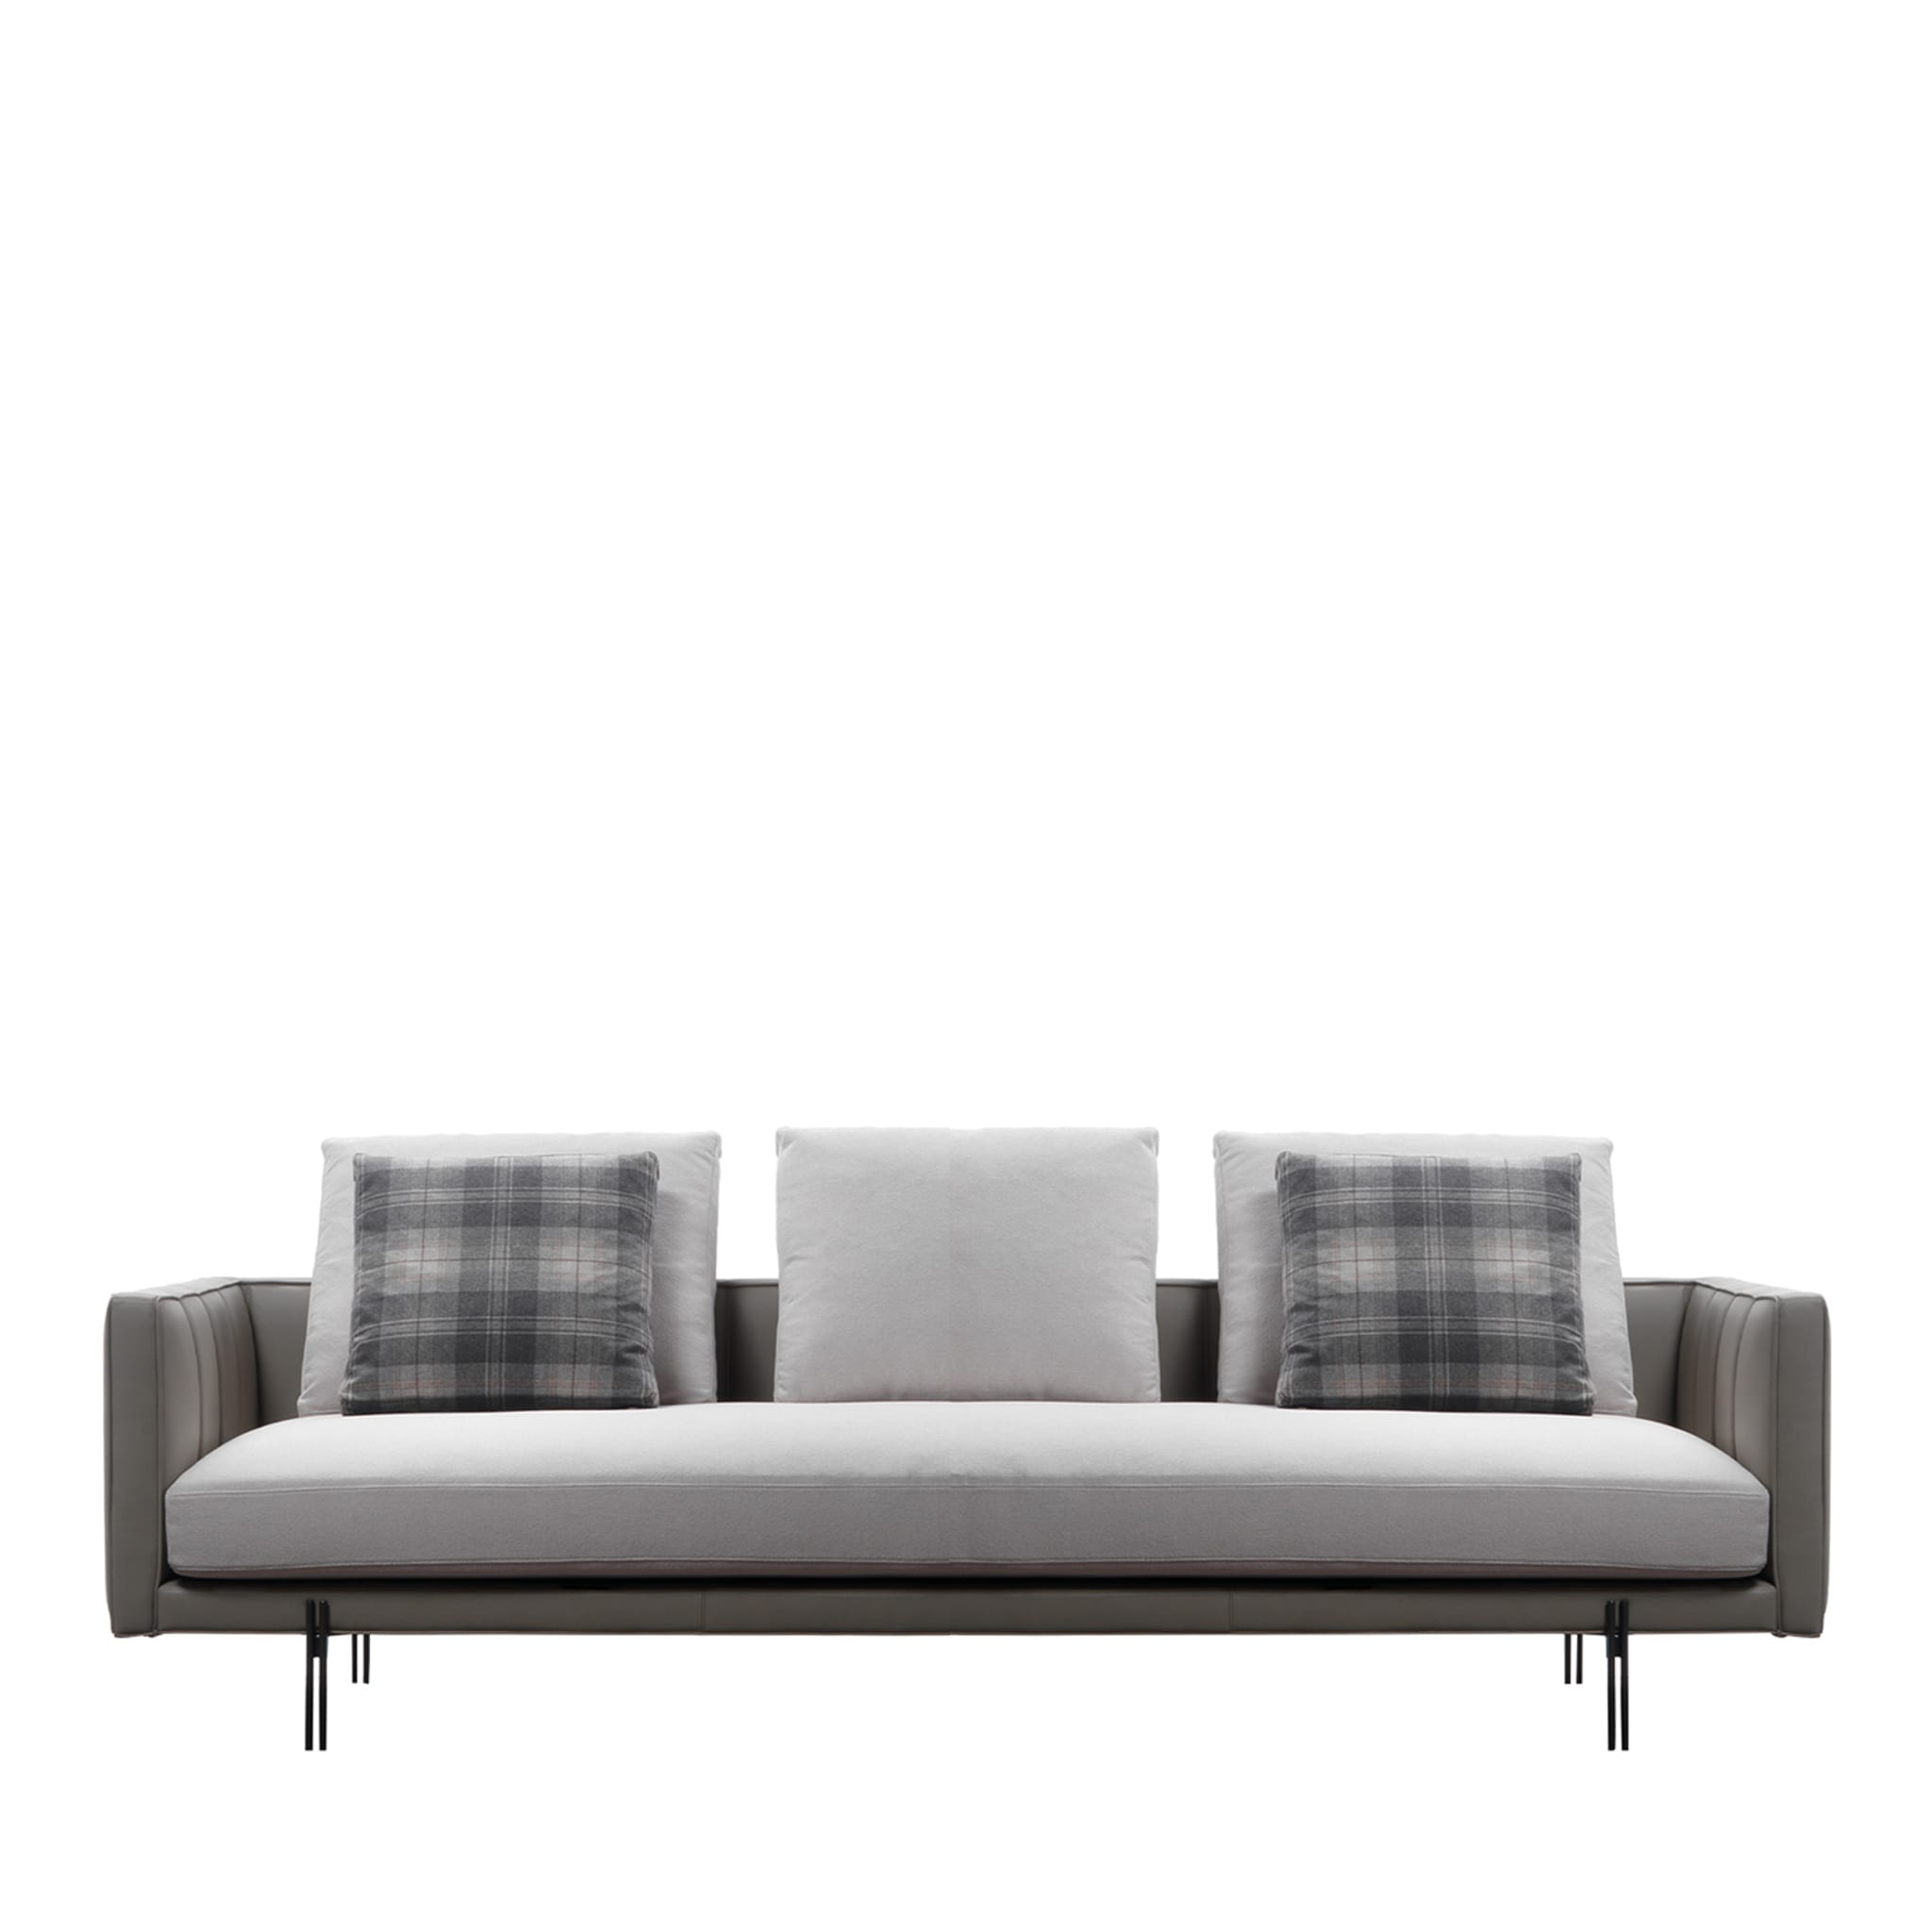 Poncho Sofa 3 Cushions - Main view